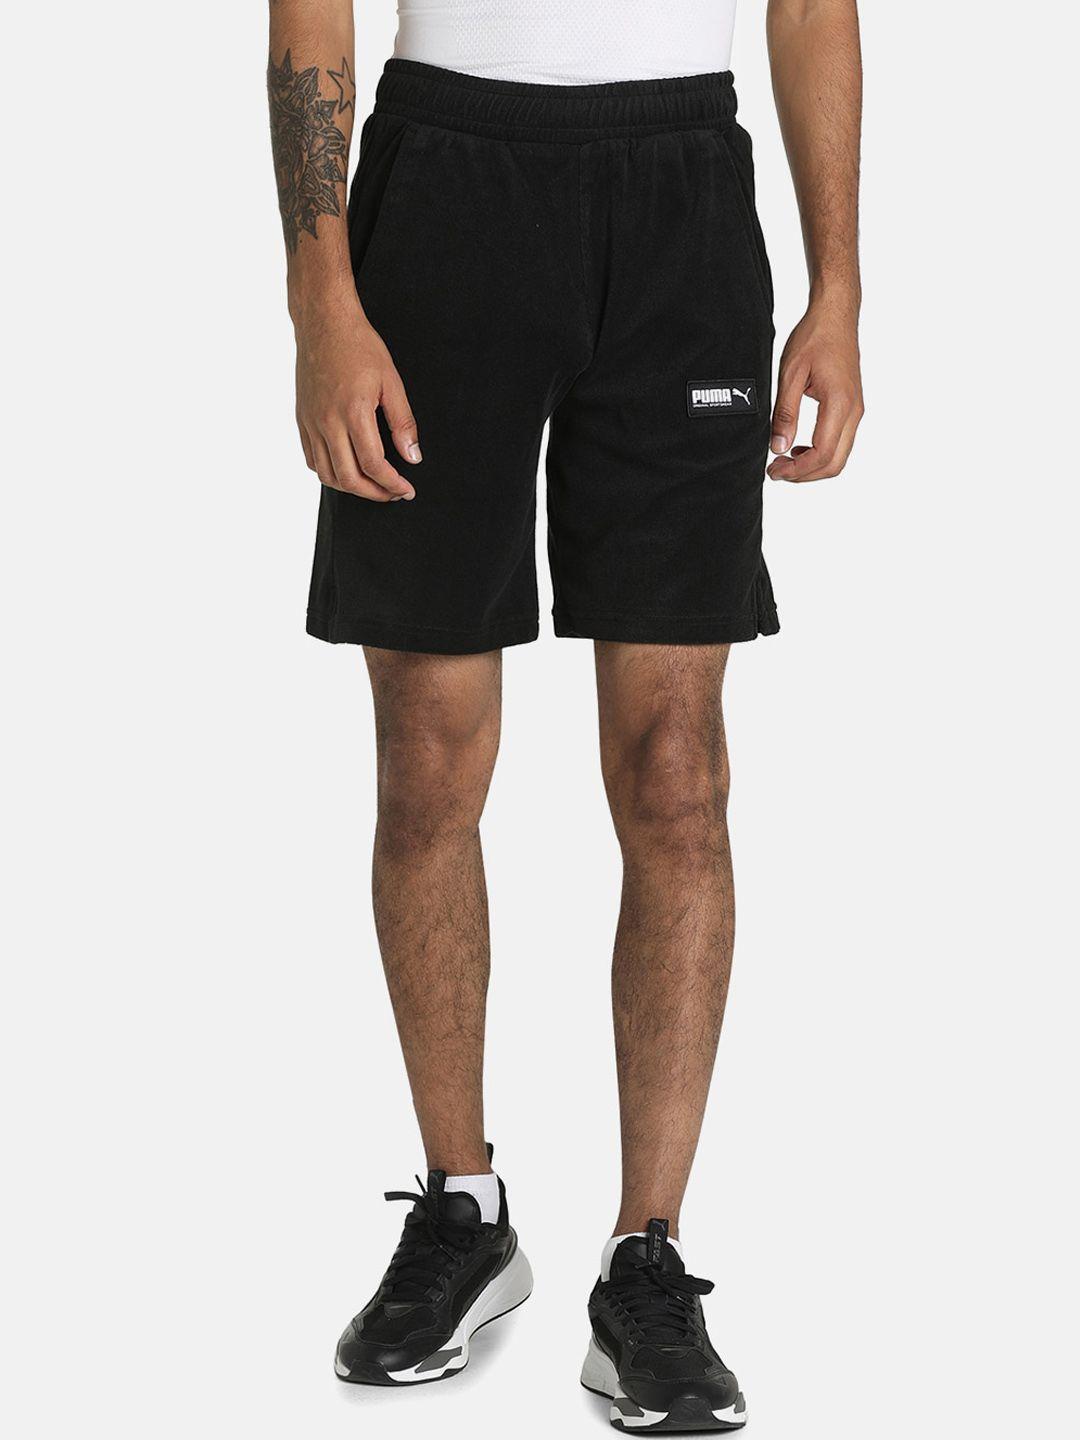 puma-men-black-fusion-toweling-sports-shorts